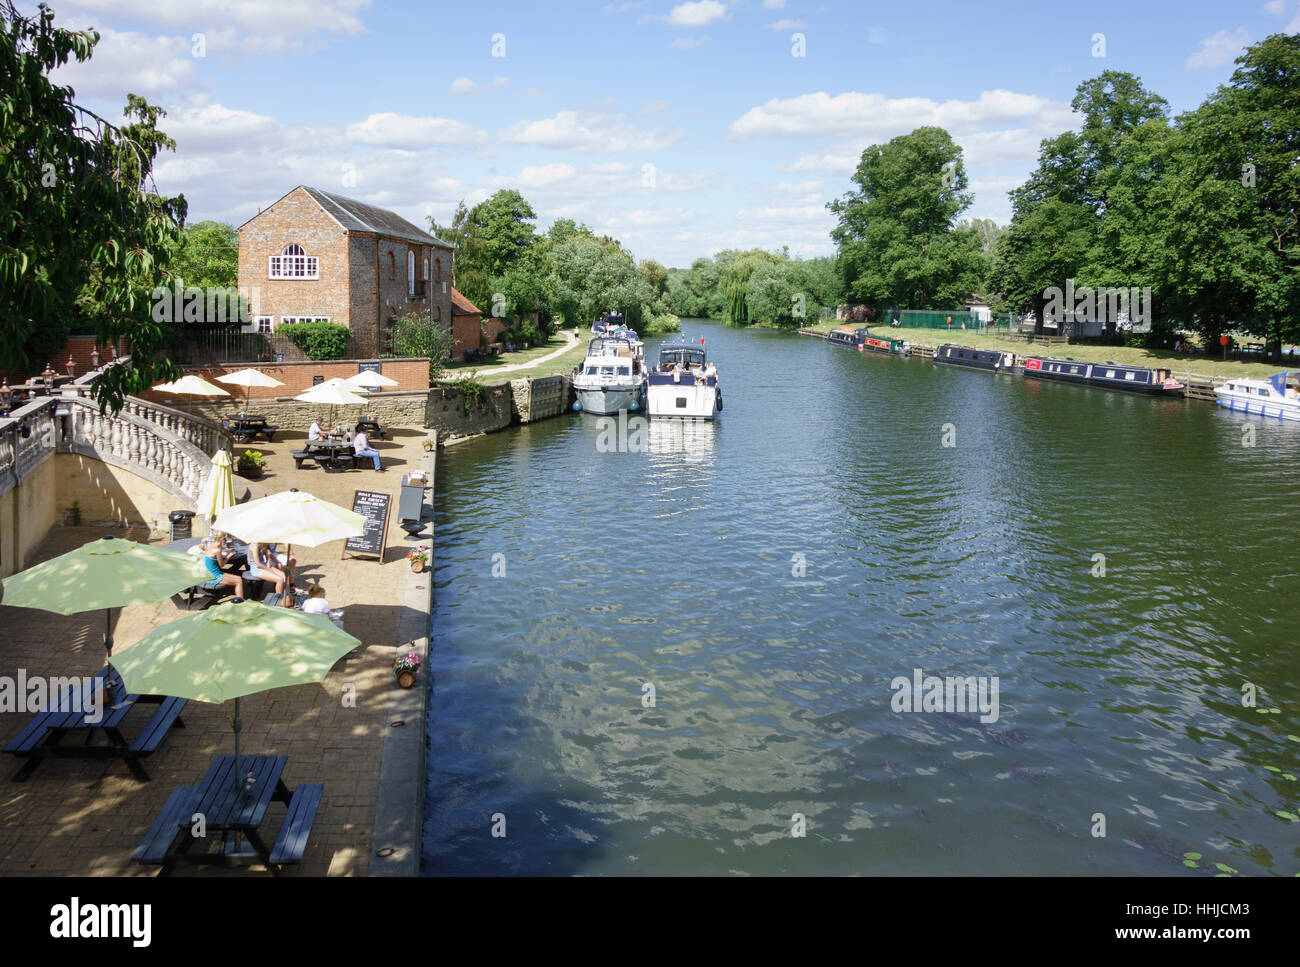 The Boat House pub garden, river Thames, Wallingford, Oxfordshire, England, UK Stock Photo